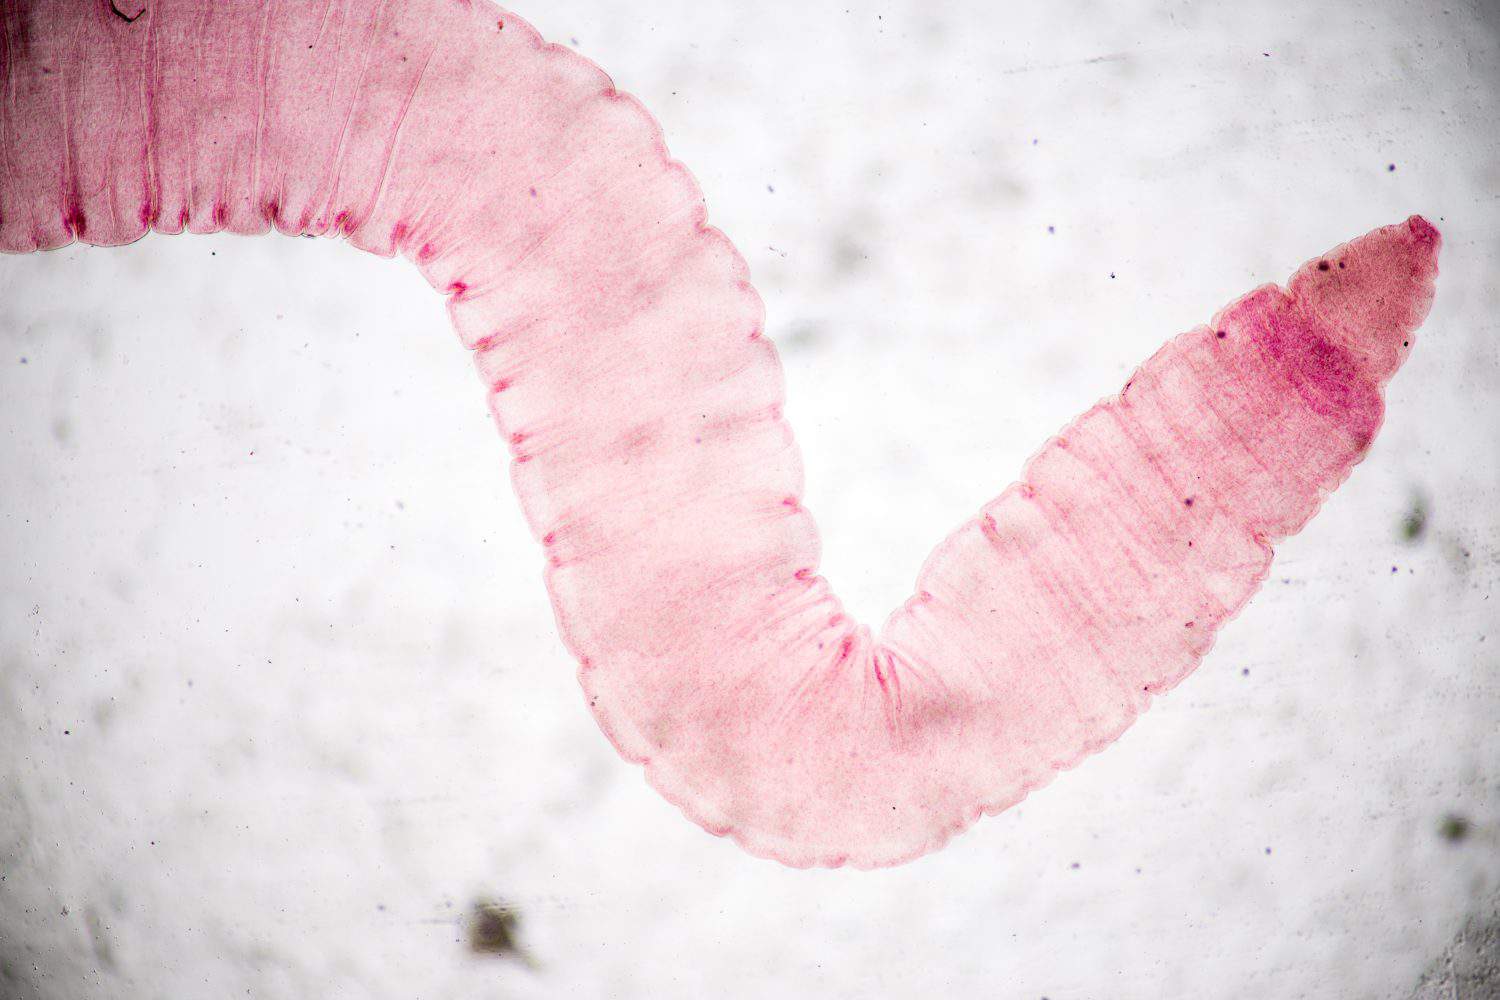 Raillietina echinobothrida is a parasitic tapeworm belonging to the class Cestoda.